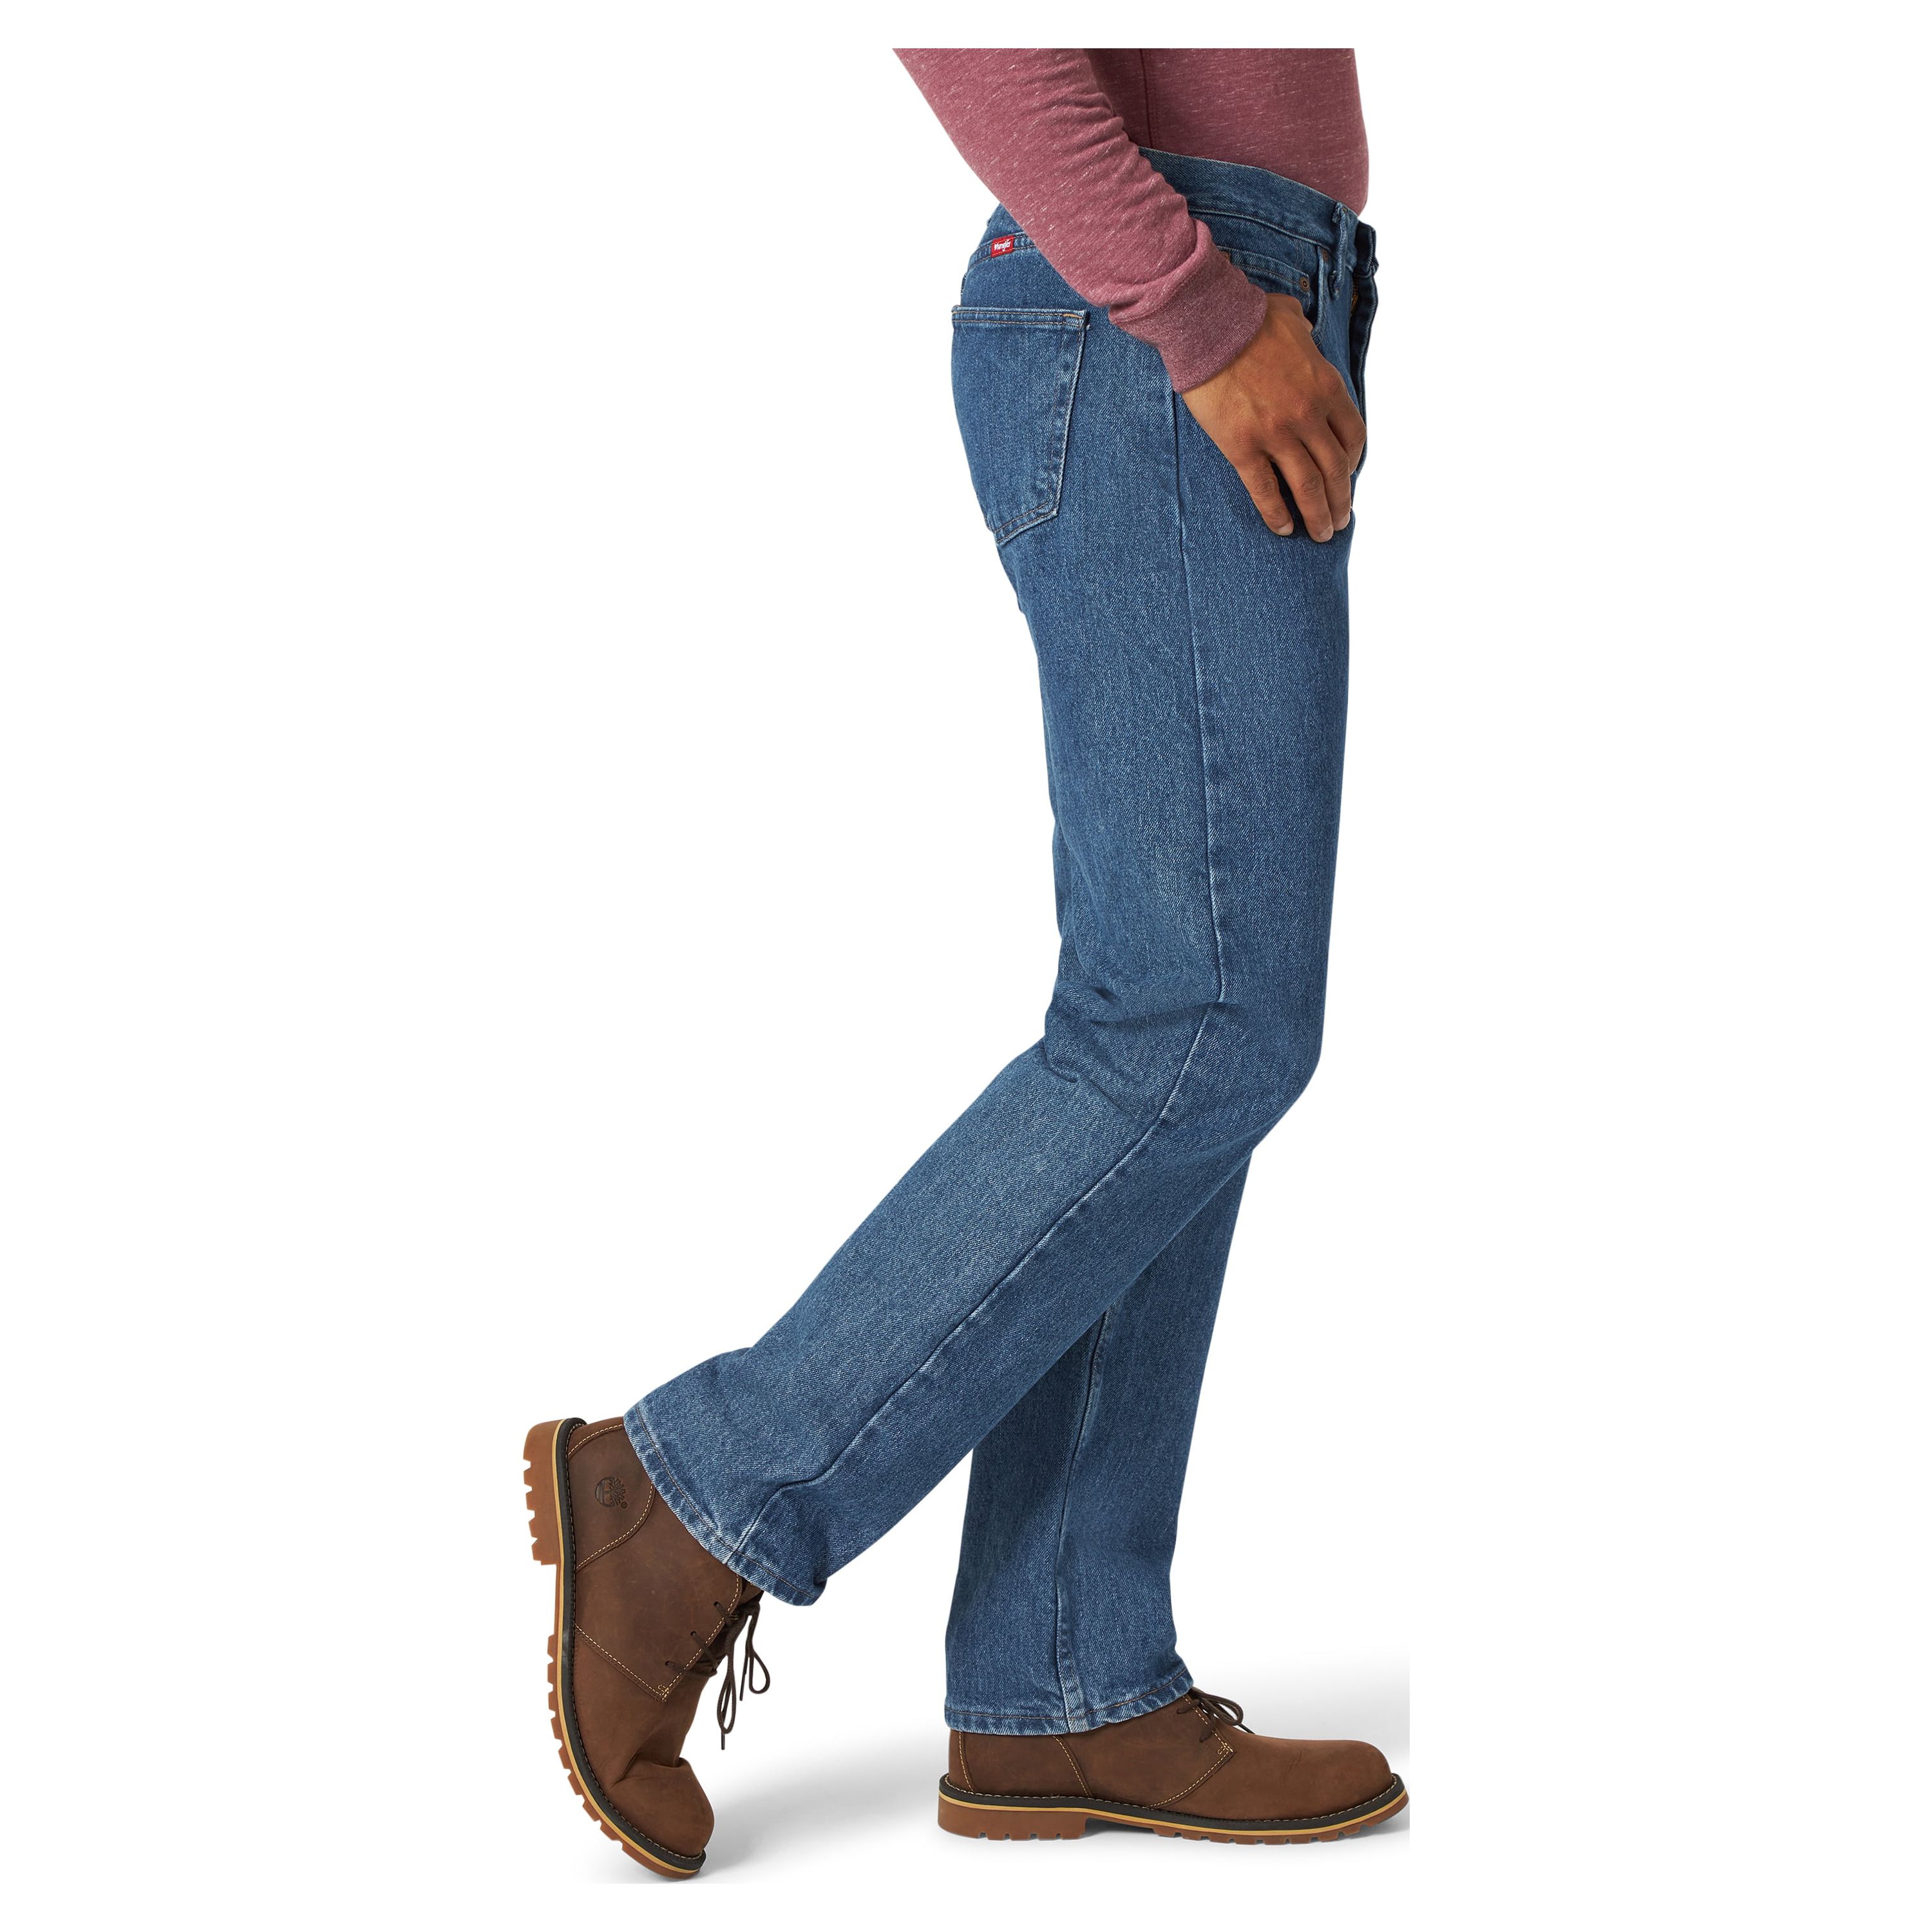 Wrangler Men's and Big Men's Regular Fit Jeans - image 3 of 5